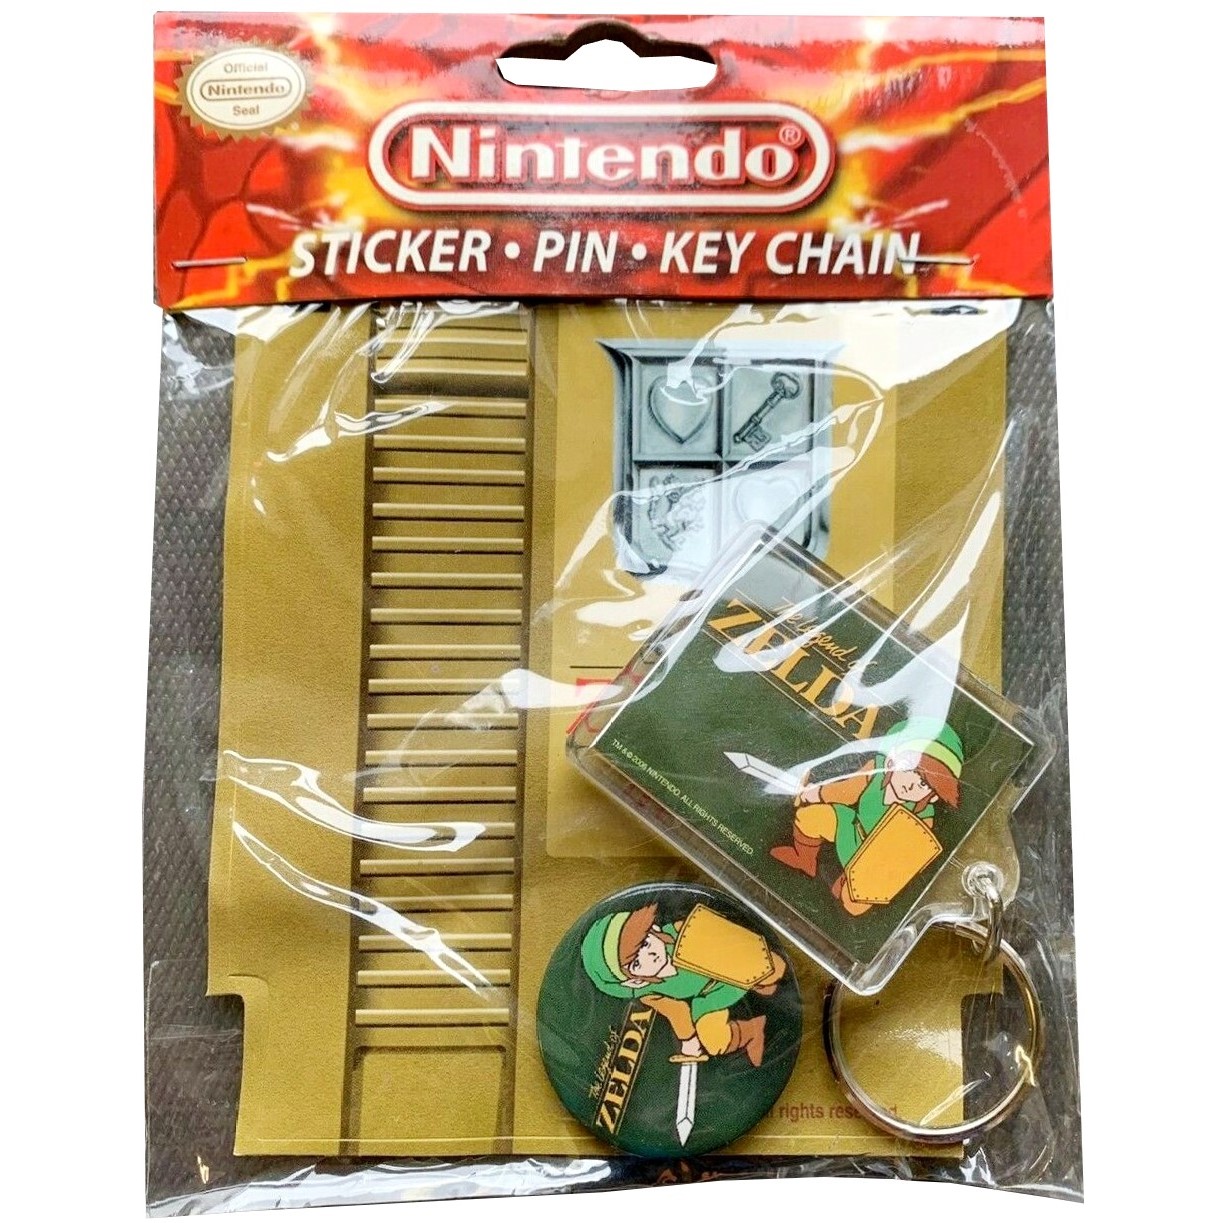 Sticker, Pin and Keychain, USA 2006.